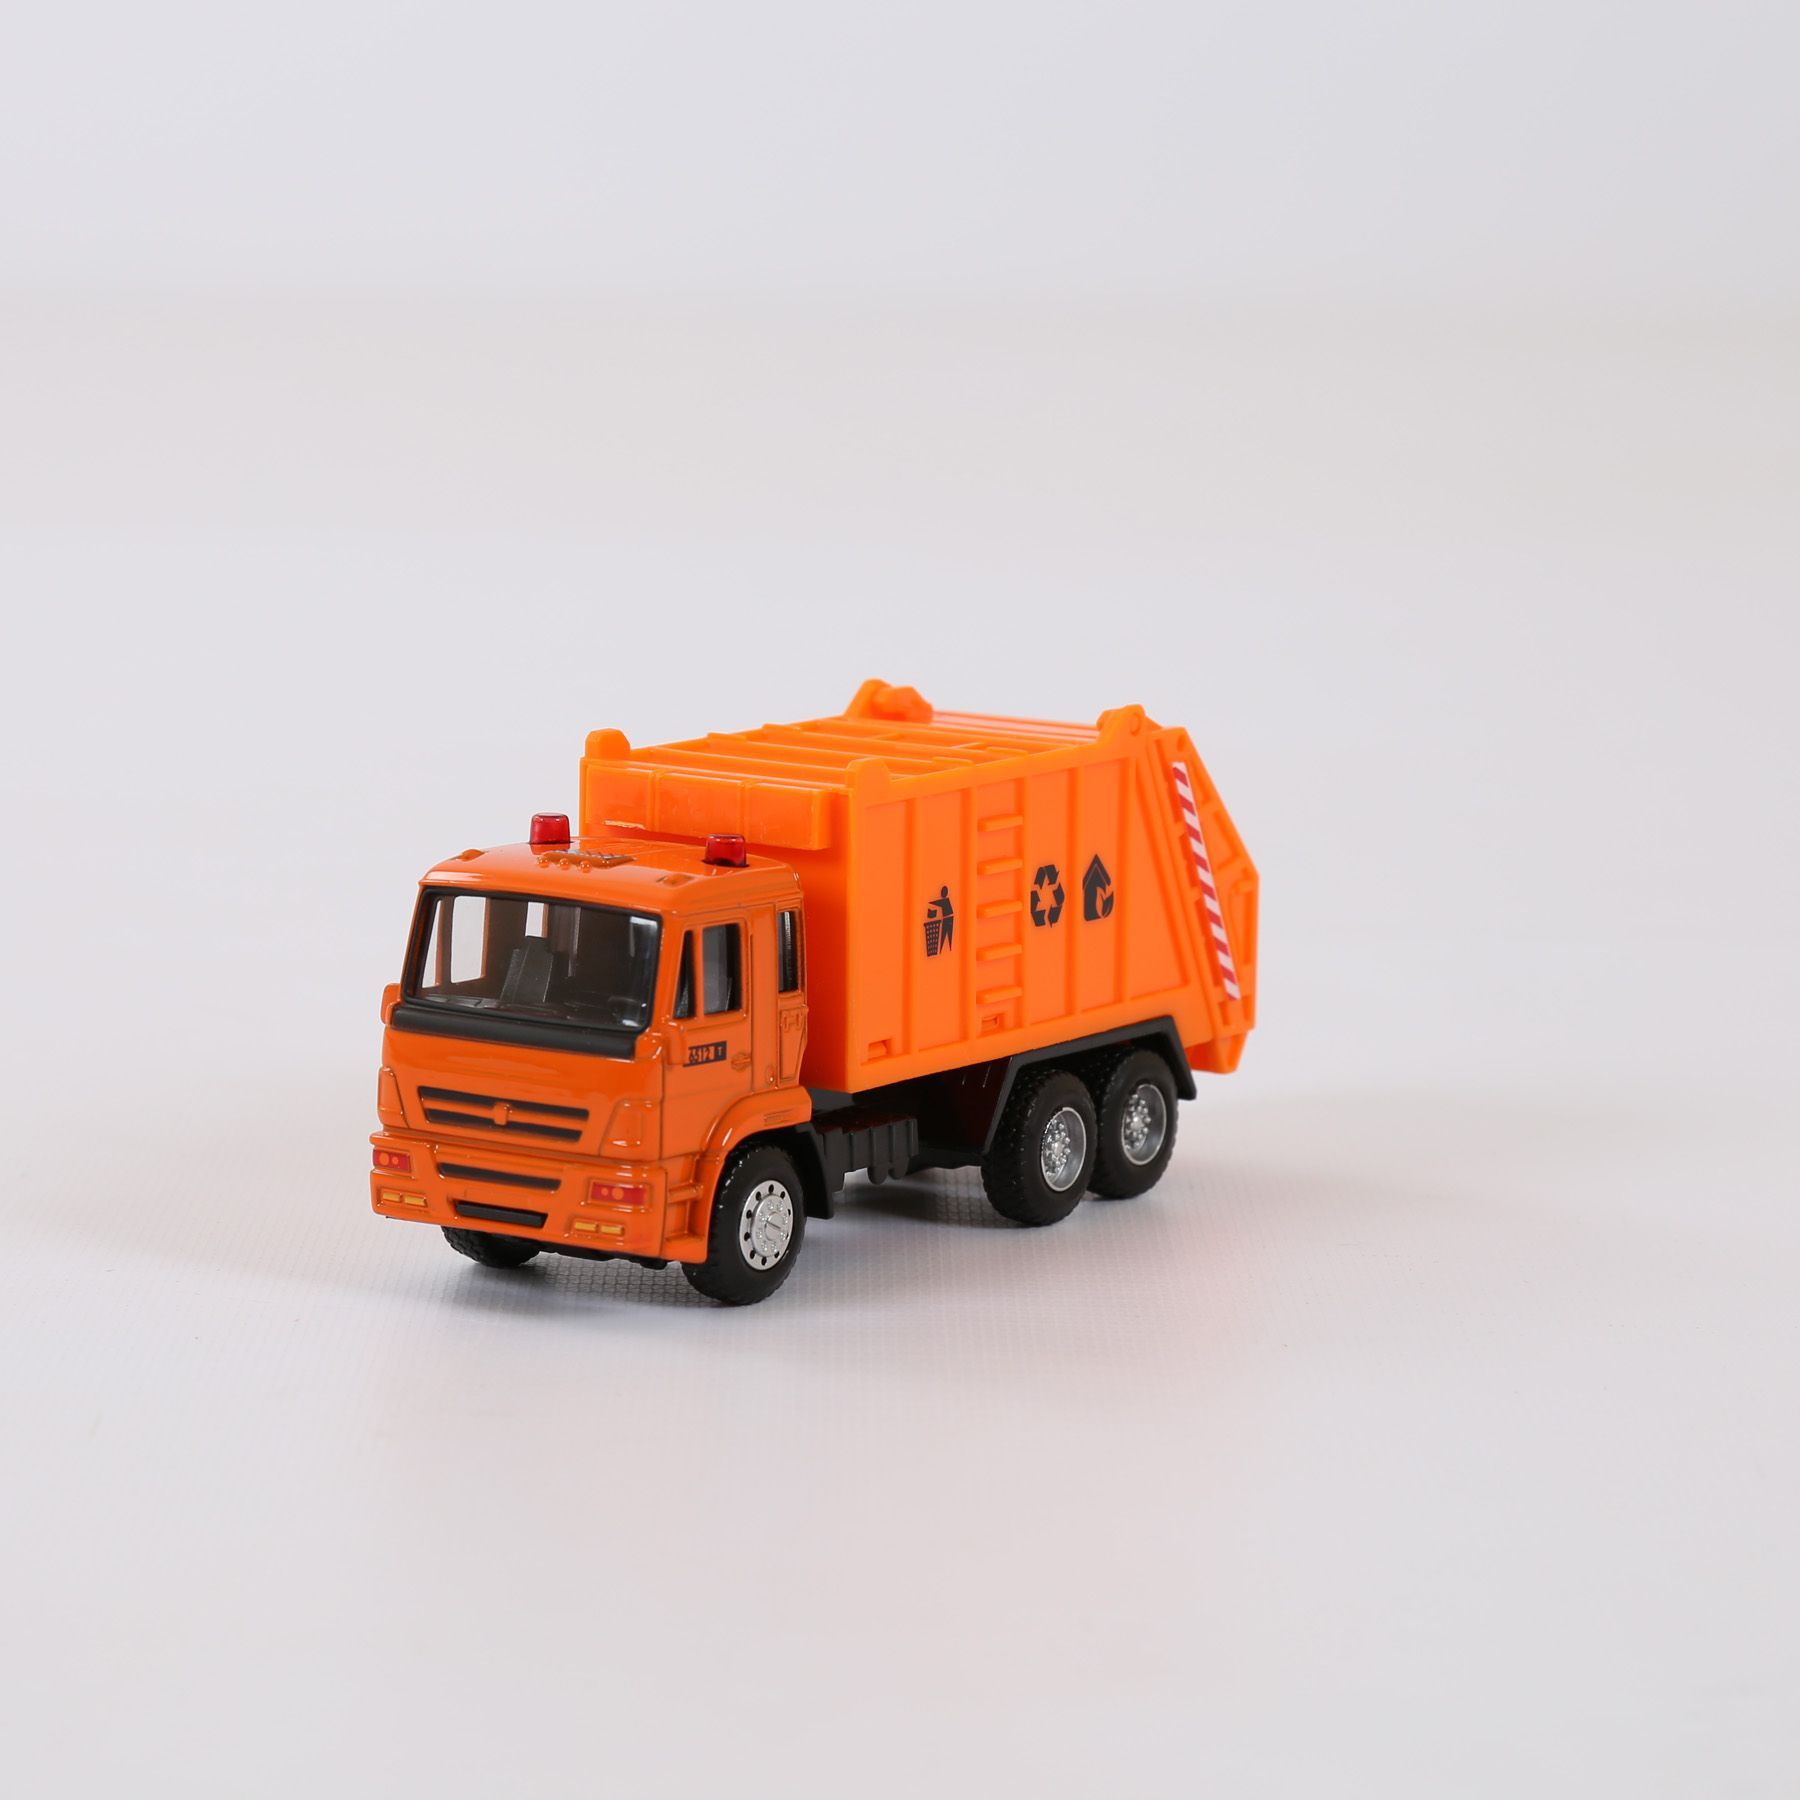 Мусоровоз Play Smart 6512d. КАМАЗ трёхколёсная коллекционная мусоровозка оранжевая. КАМАЗ 5360. Эвакуатор Play Smart.